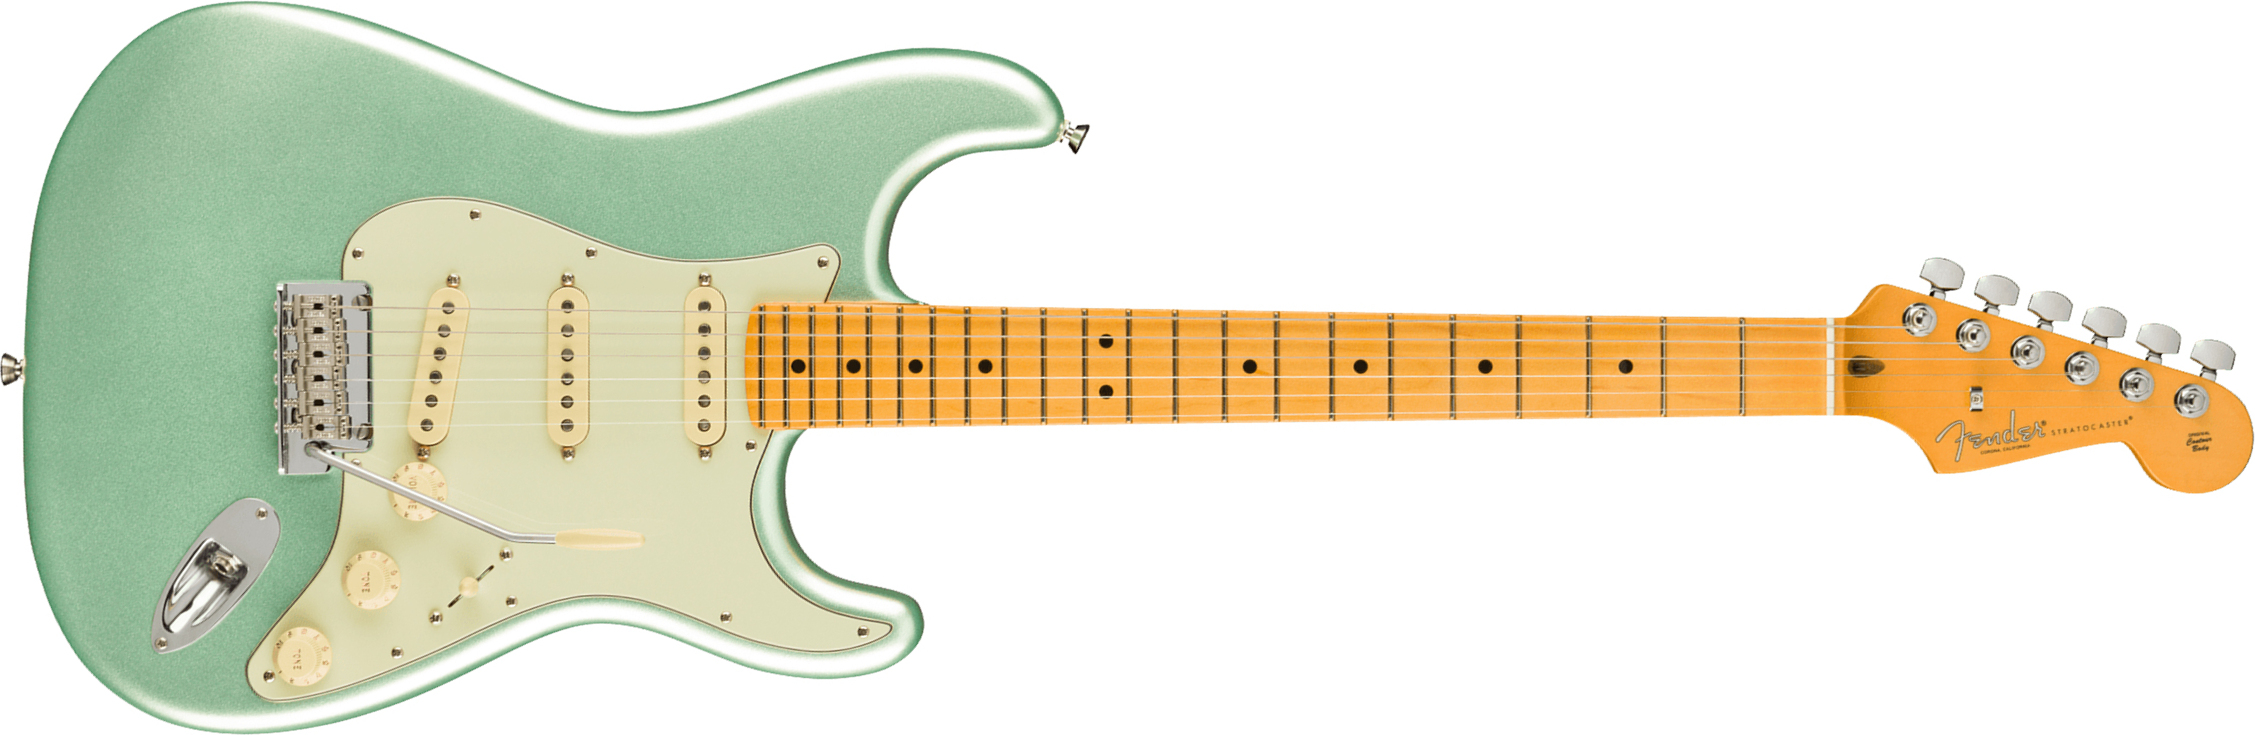 Fender Strat American Professional Ii Usa Mn - Mystic Surf Green - Guitarra eléctrica con forma de str. - Main picture